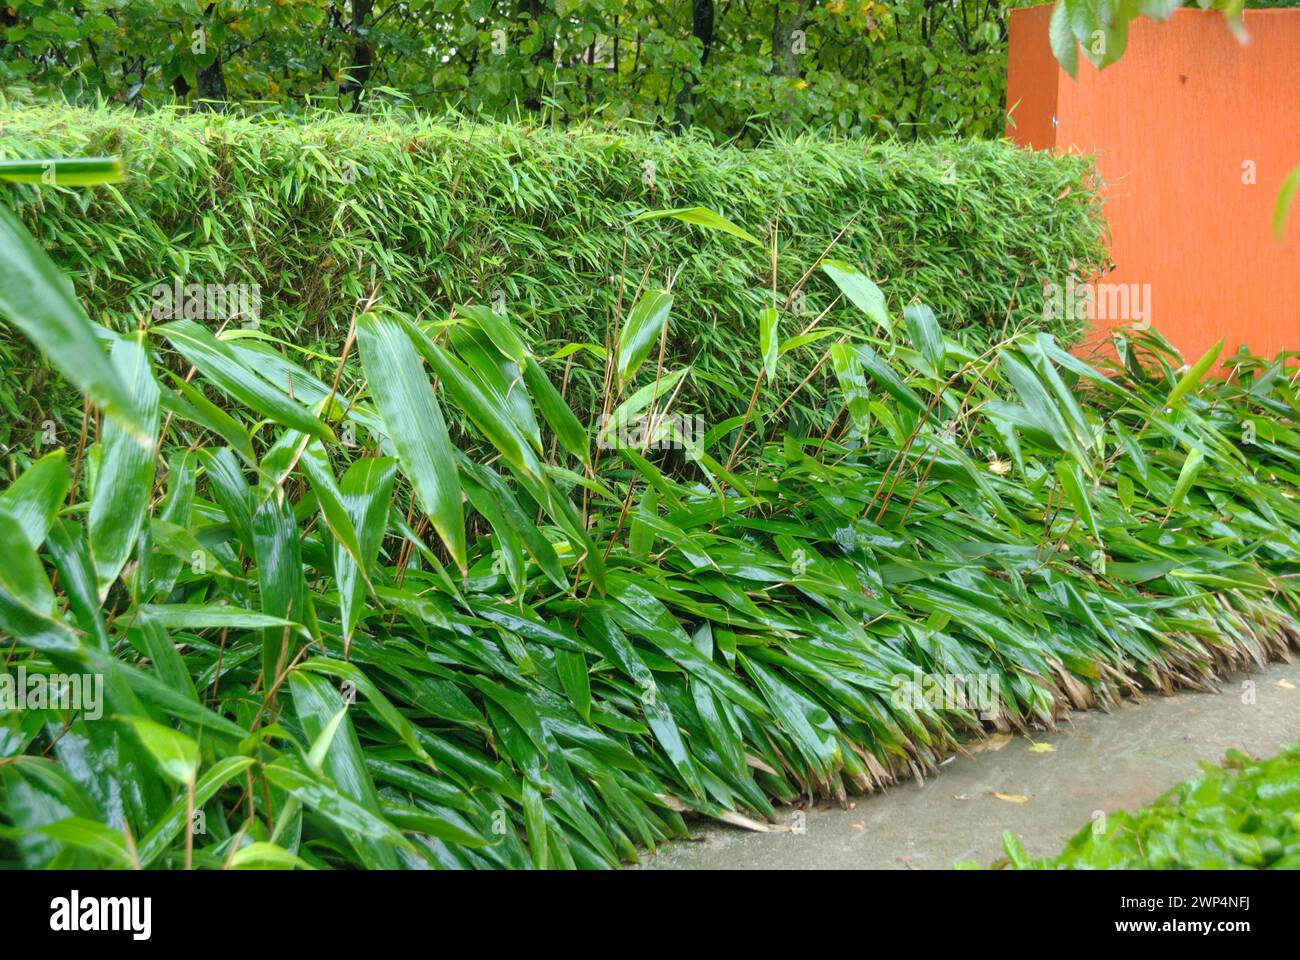 Spotted broadleaf dwarf bamboo (Sasa palmata f. nebulosa), (Fargesia), Rhodo 2014, Gelderland, Netherlands Stock Photo